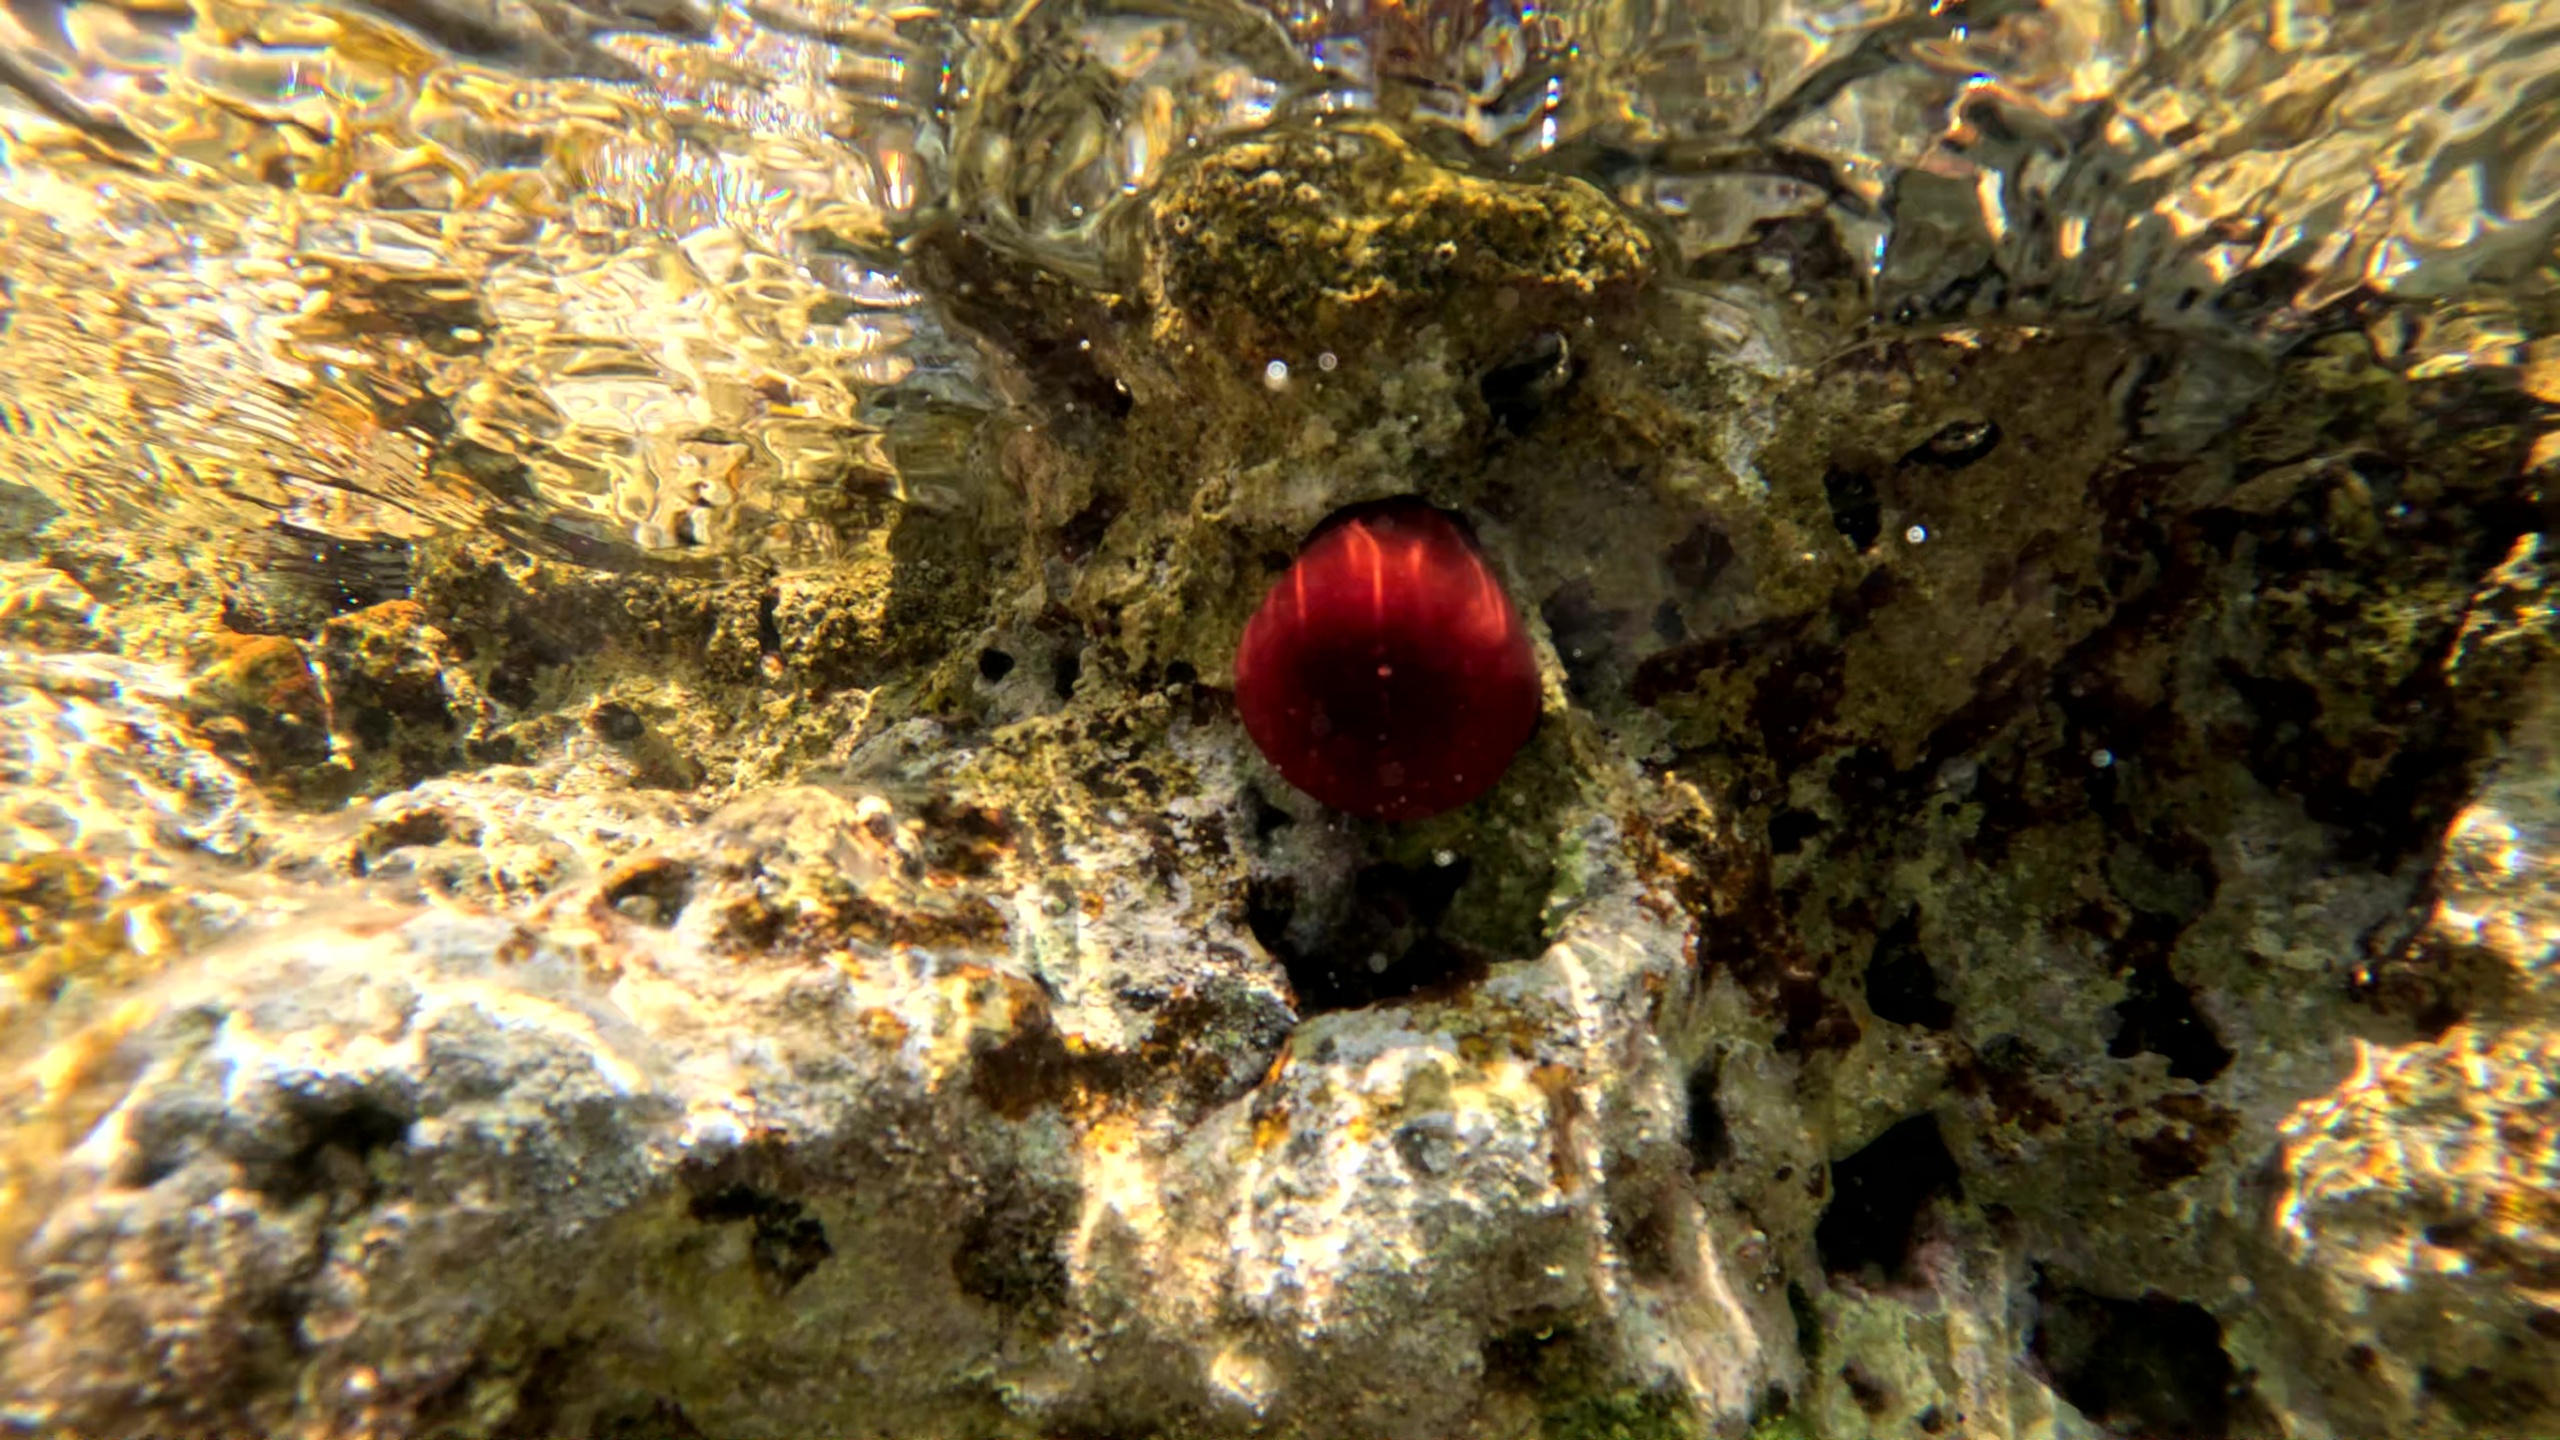 Beadlet anemone - Actinia equina - Pomodoro di mare - intotheblue.it